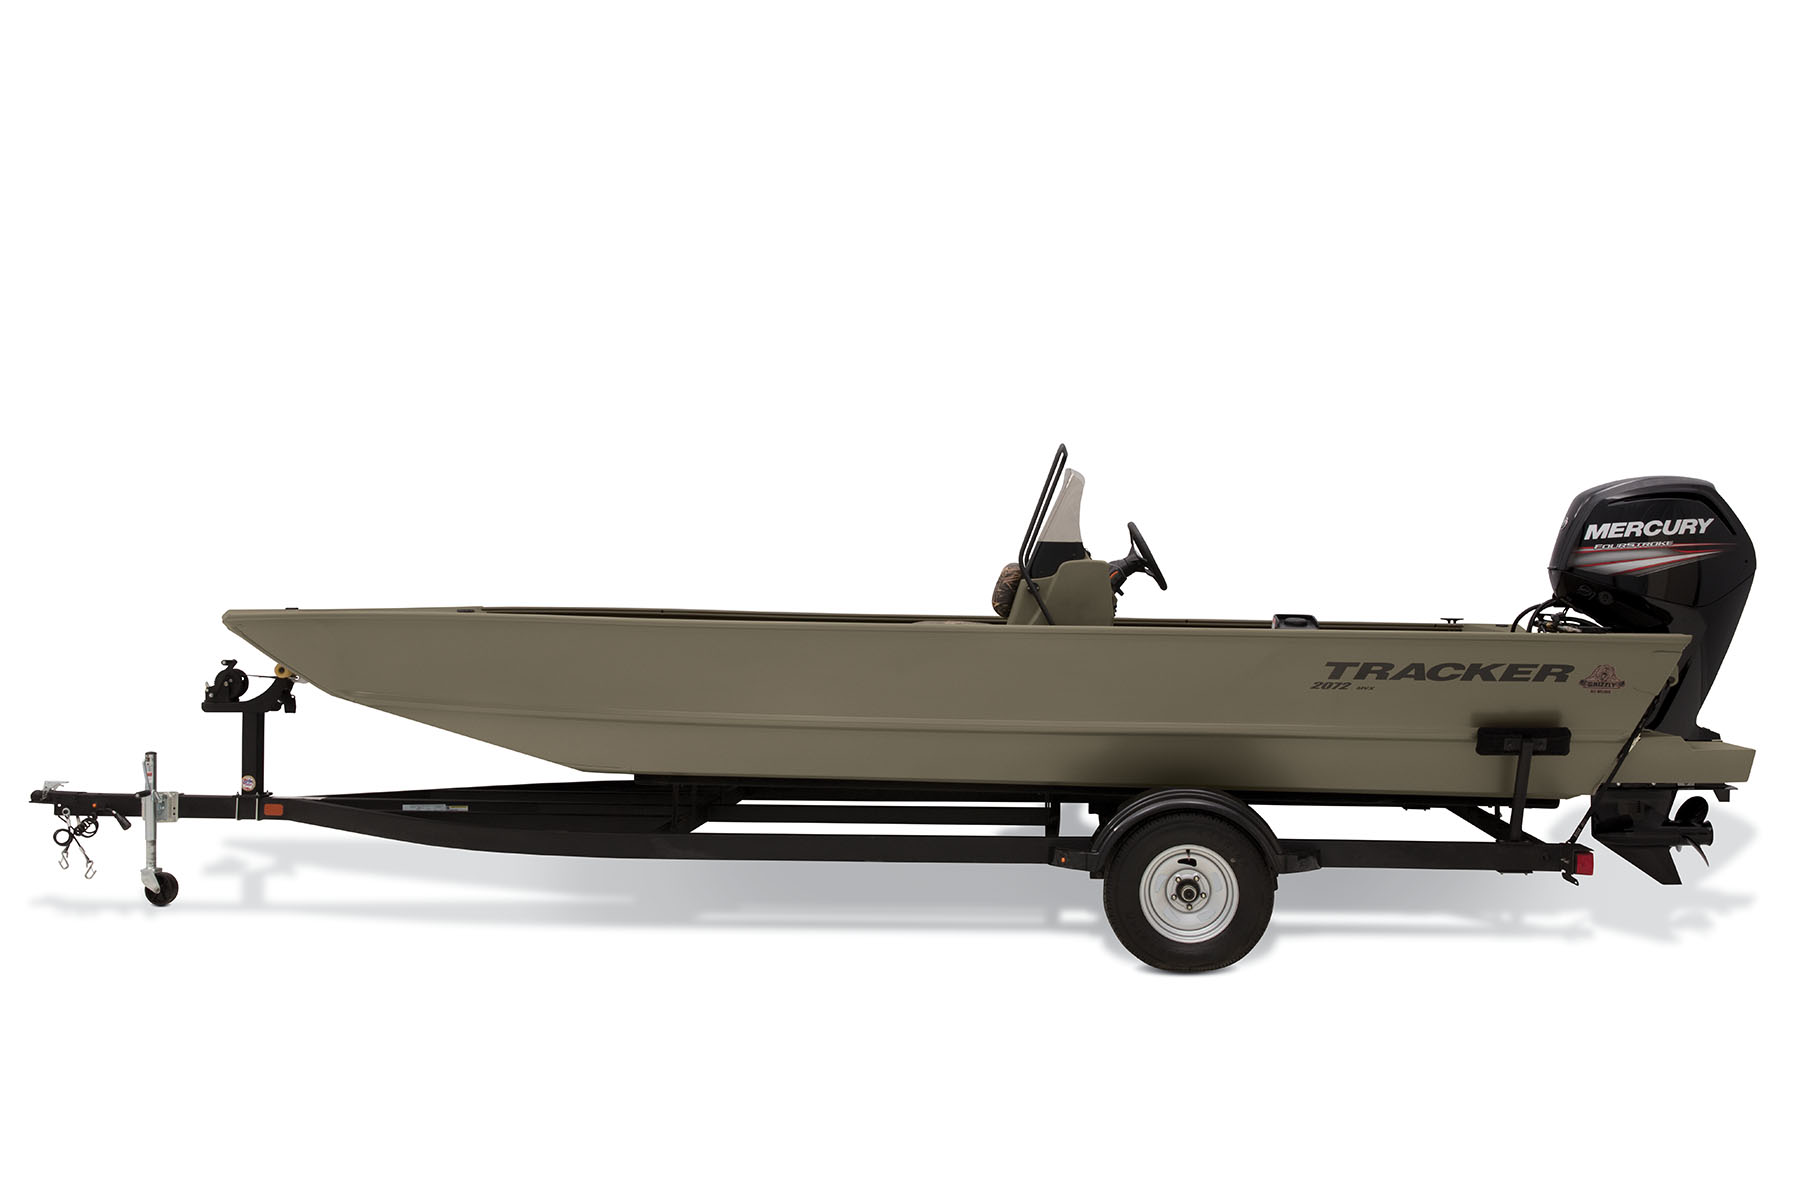 https://www.trackerboats.com/content/dam/wrmg/tracker/2020/all-welded-jon-boats/grizzly-2072-cc/studio/_2020_TRACKER_102020_All-Welded-Jon-Boats_2282020_GRIZZLY-2072-CC_4939_Boat-Motor-Trailer_1327846__2019_TRACKER_102019_All-Welded-Jon-Boats_2282019_GRIZZLY-2072-CC_4599_Boat-Motor-Trailer_1327846_TU2072CC_FA001_19.jpg